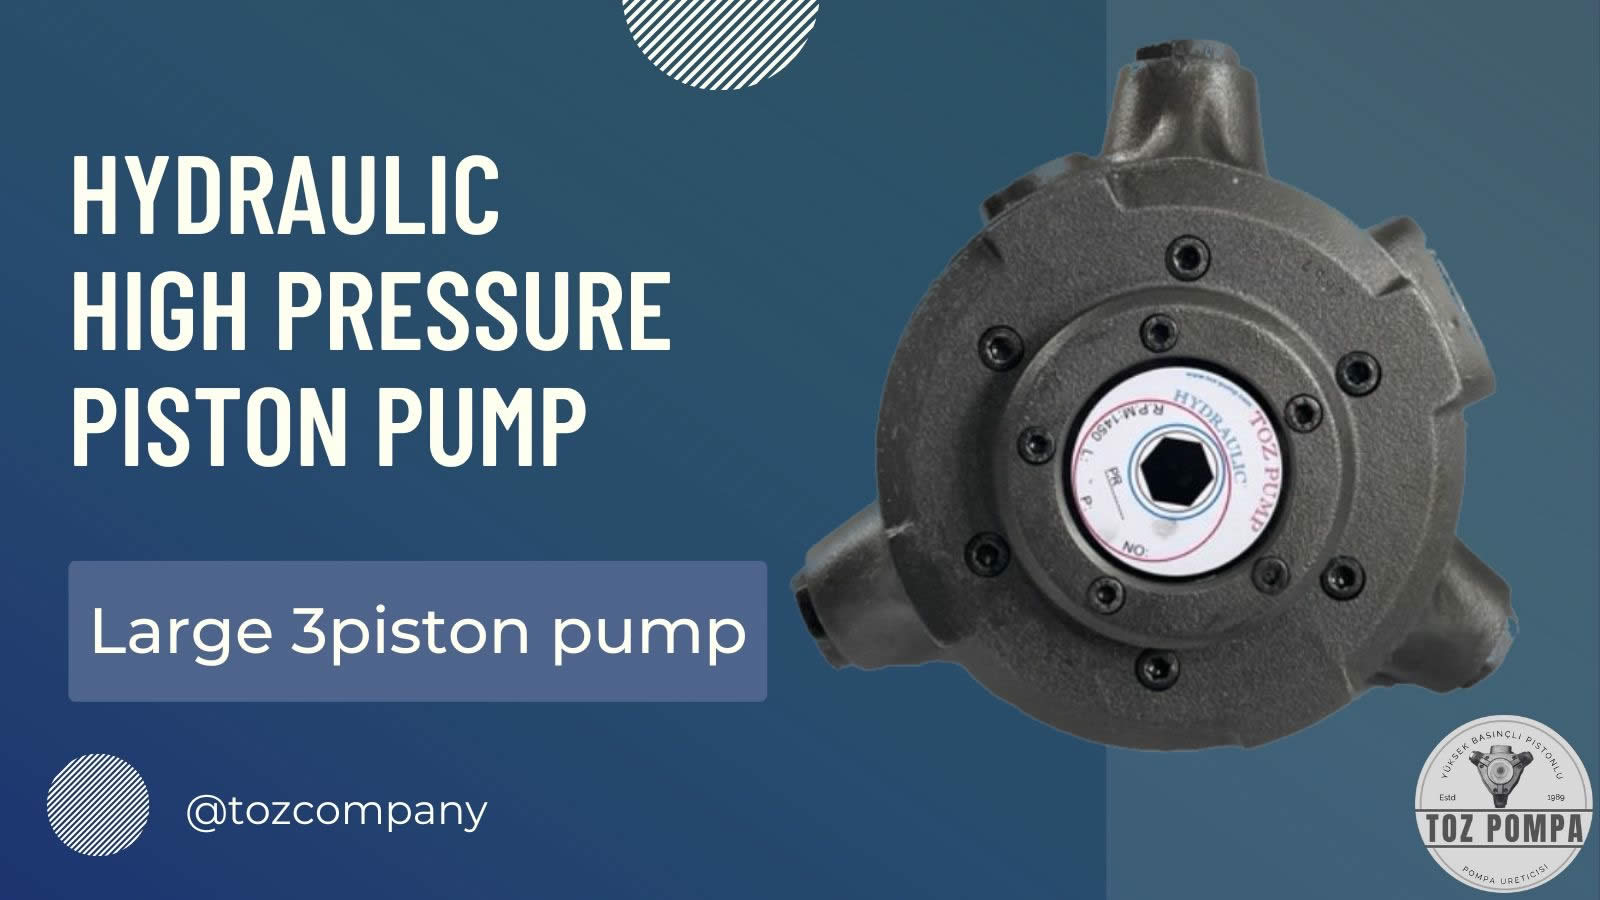 Large 3 piston pump